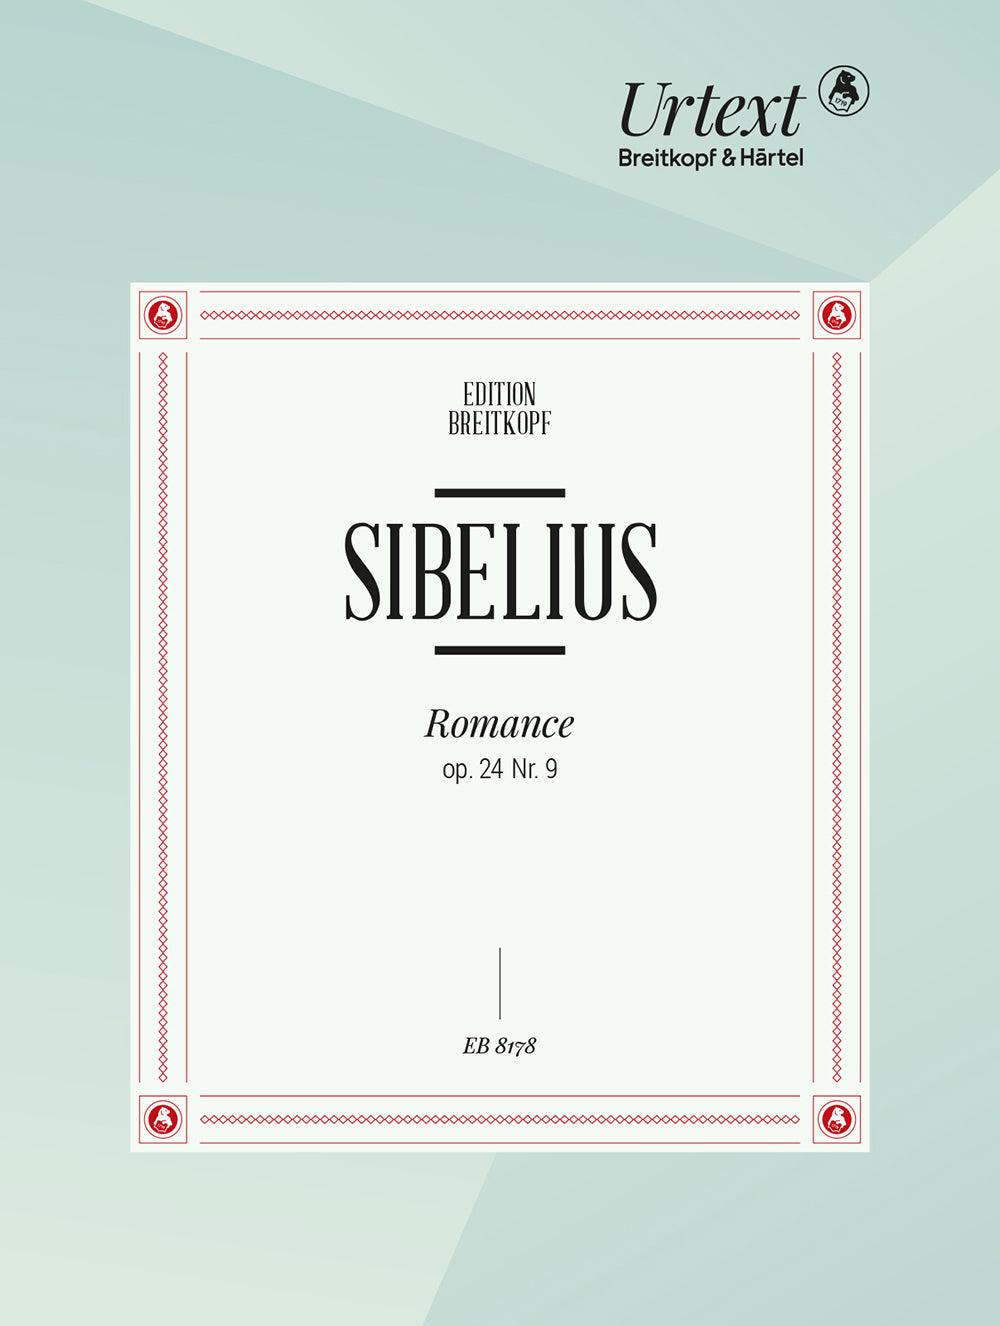 Sibelius Romance in D-Flat Op. 24 #9